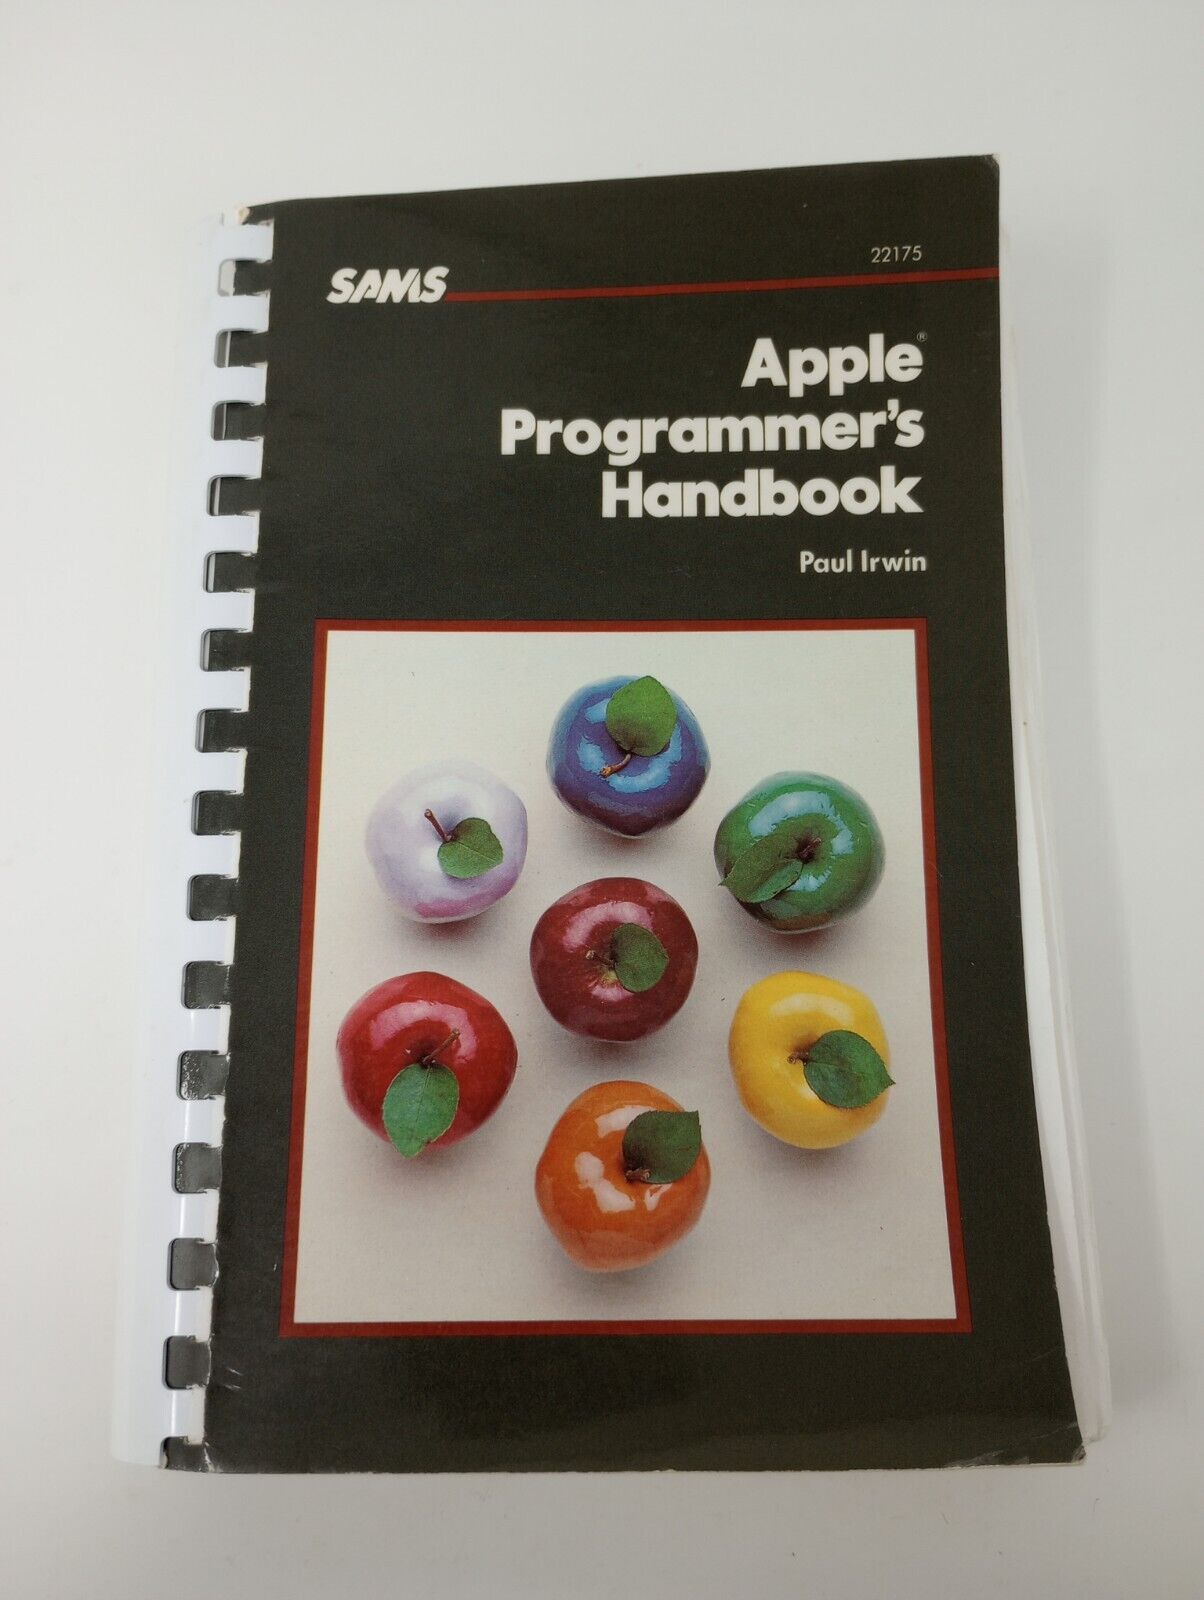 Apple Programmer\'s Handbook By Paul Irwin (SAMS, 1984) RARE First Edition/Print 